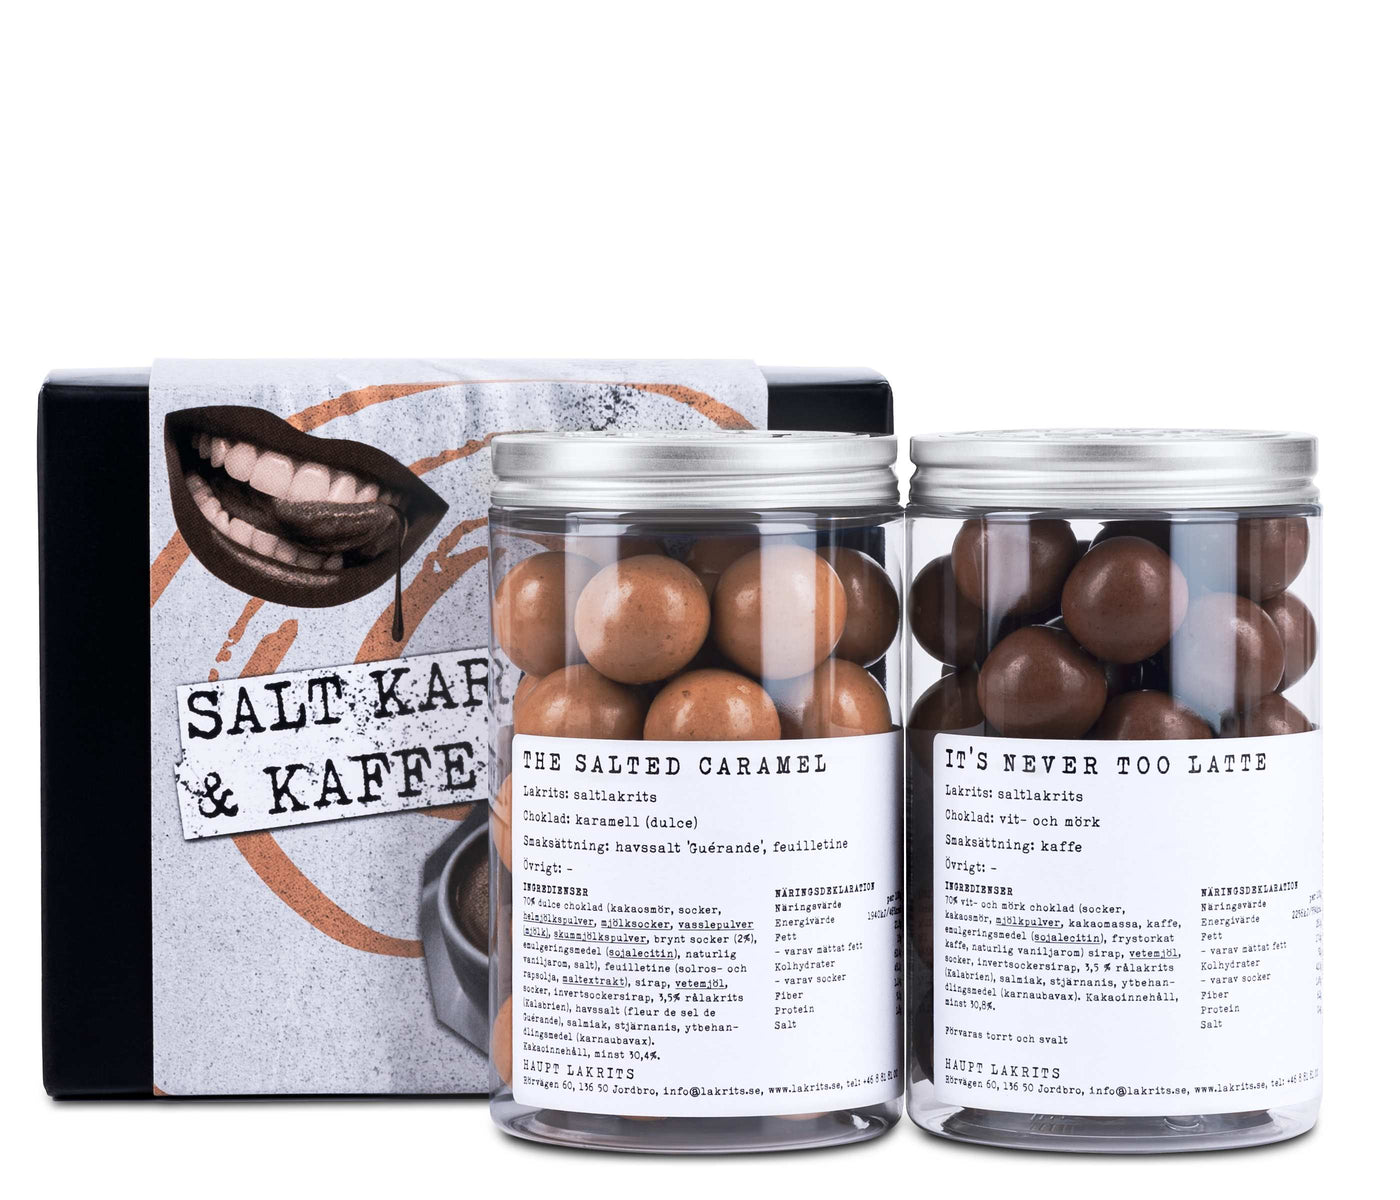 Haupt Lakrits Salt Caramel & Caffè Latte Liquorice Gift Box